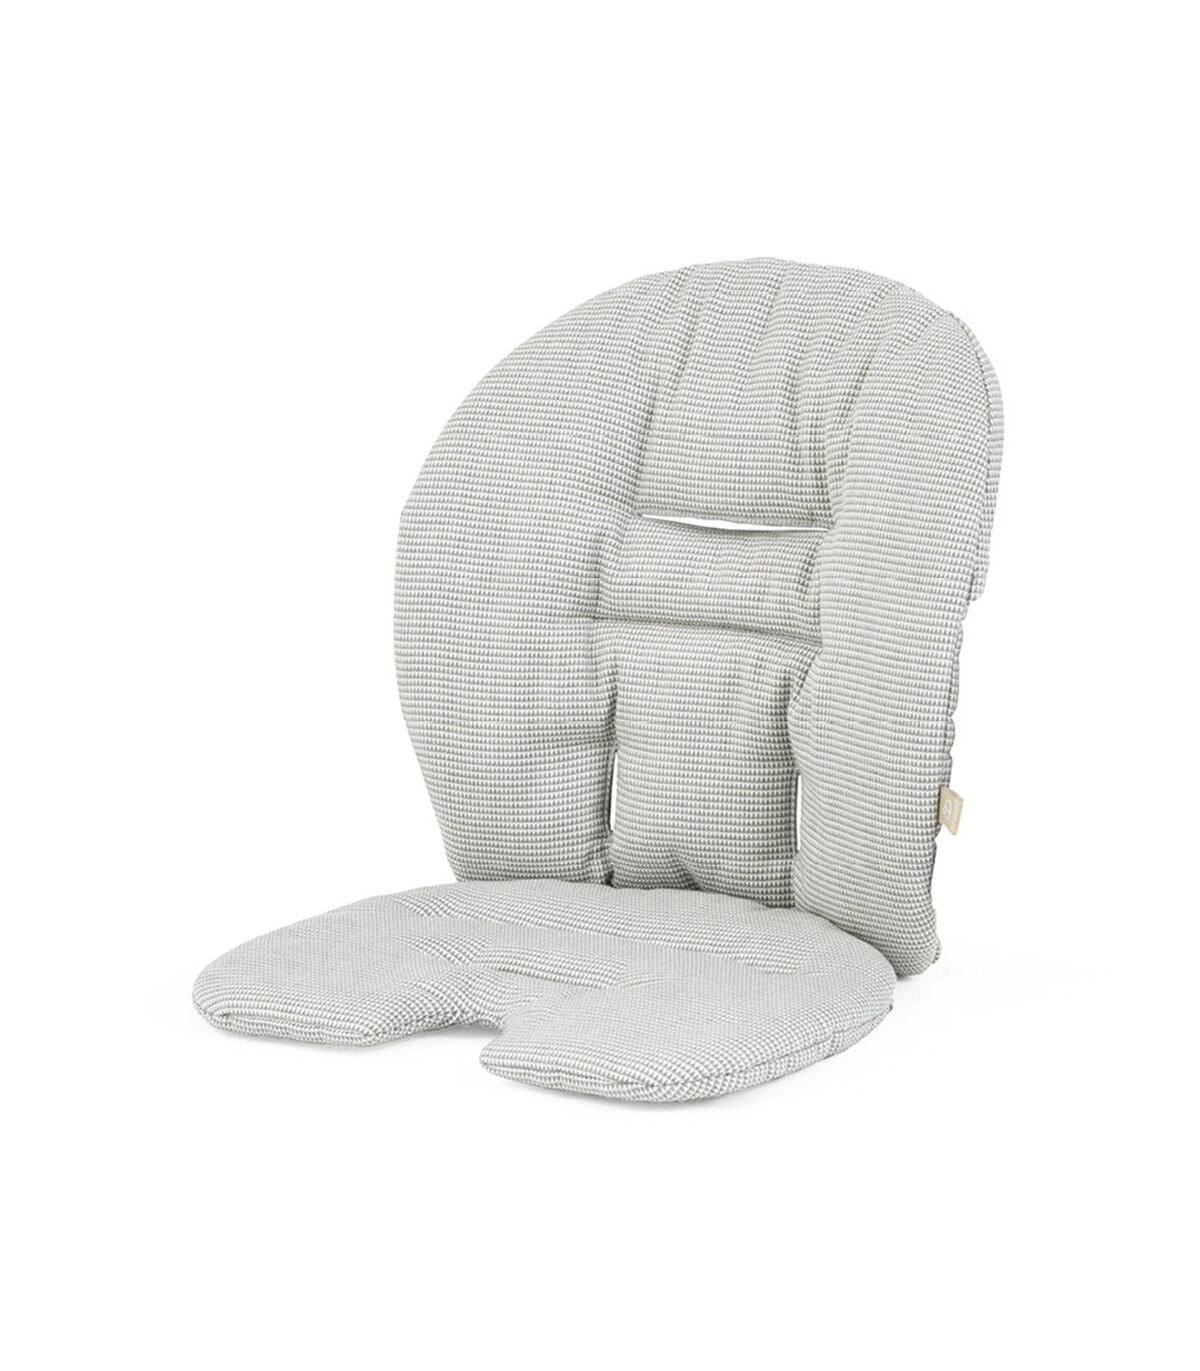 Stokke®Steps™ Baby Set Cushion